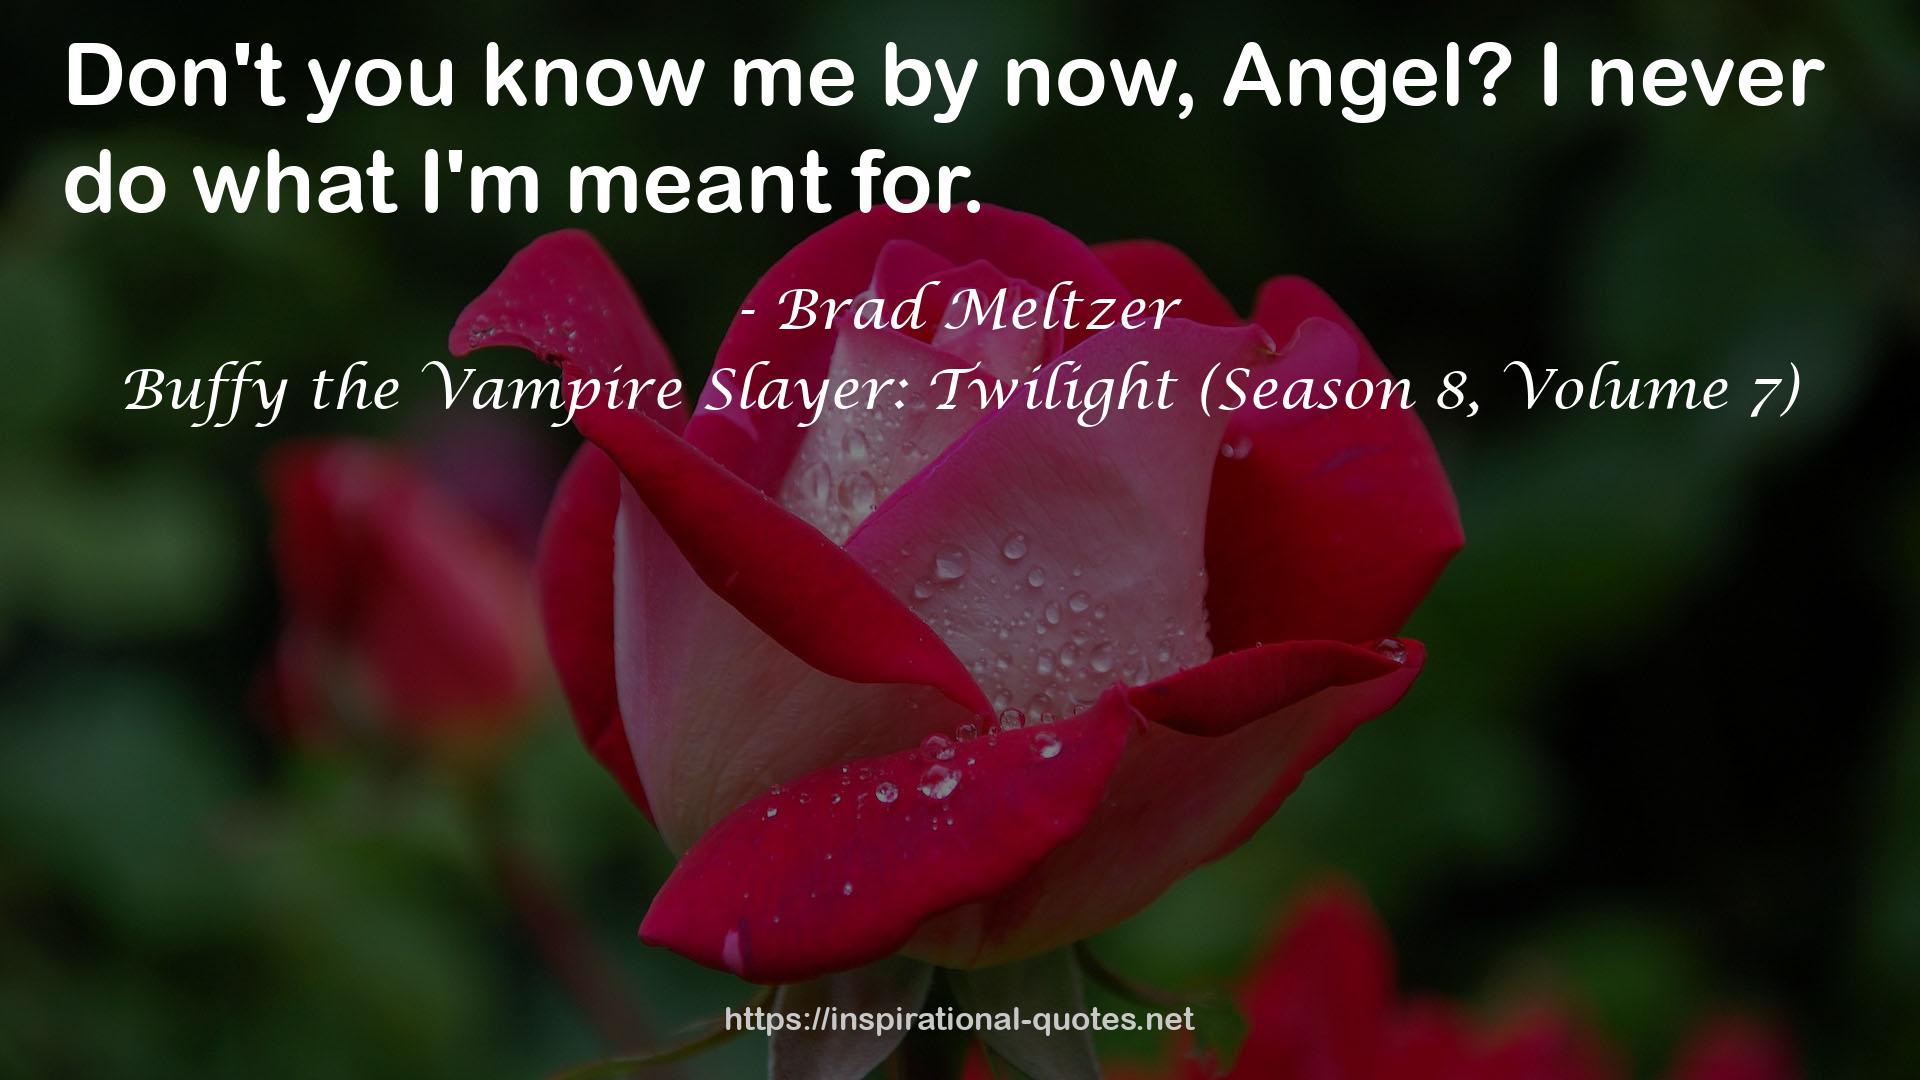 Buffy the Vampire Slayer: Twilight (Season 8, Volume 7) QUOTES